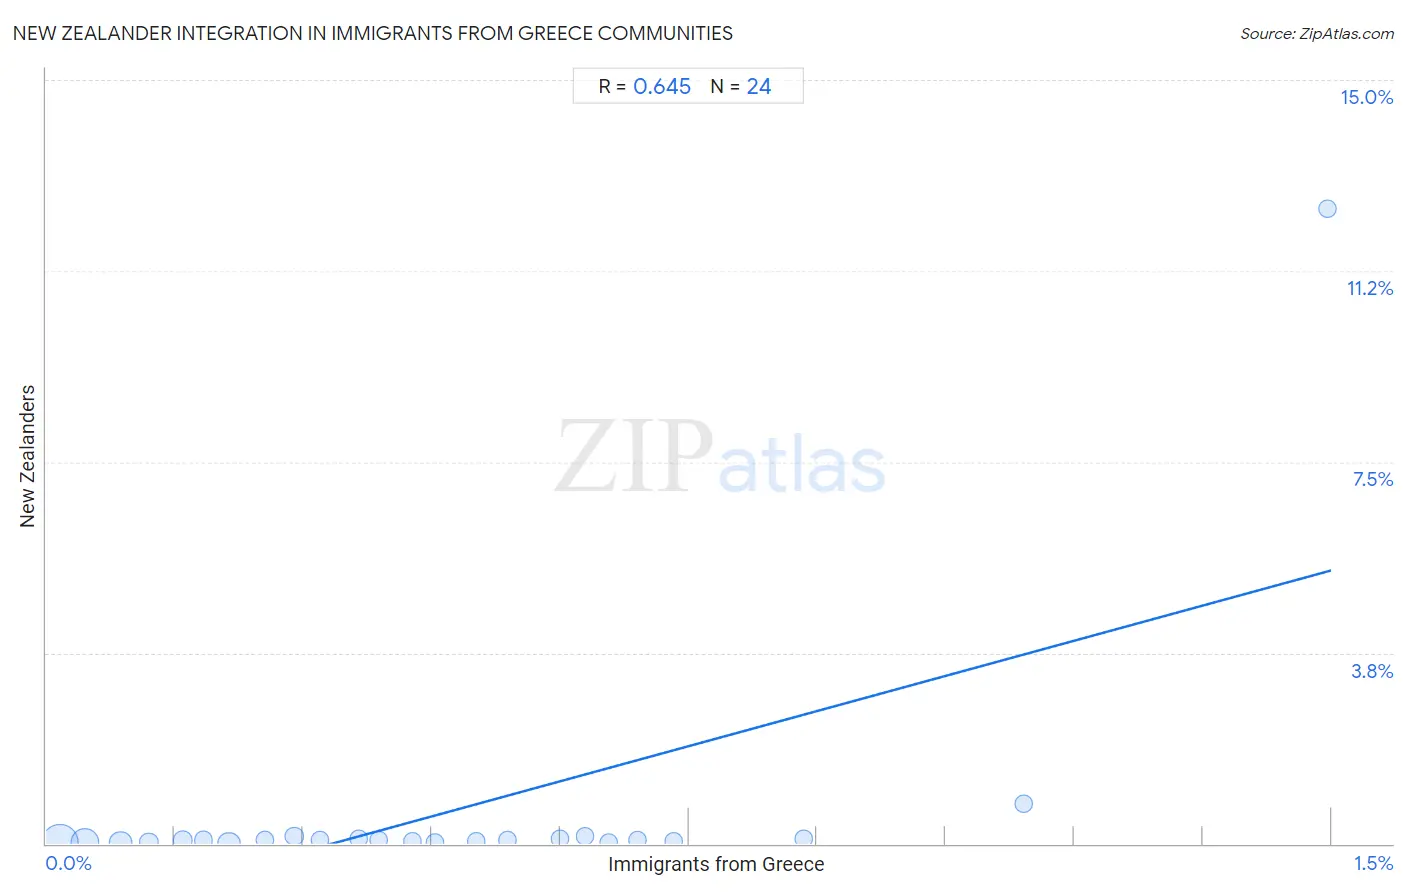 Immigrants from Greece Integration in New Zealander Communities